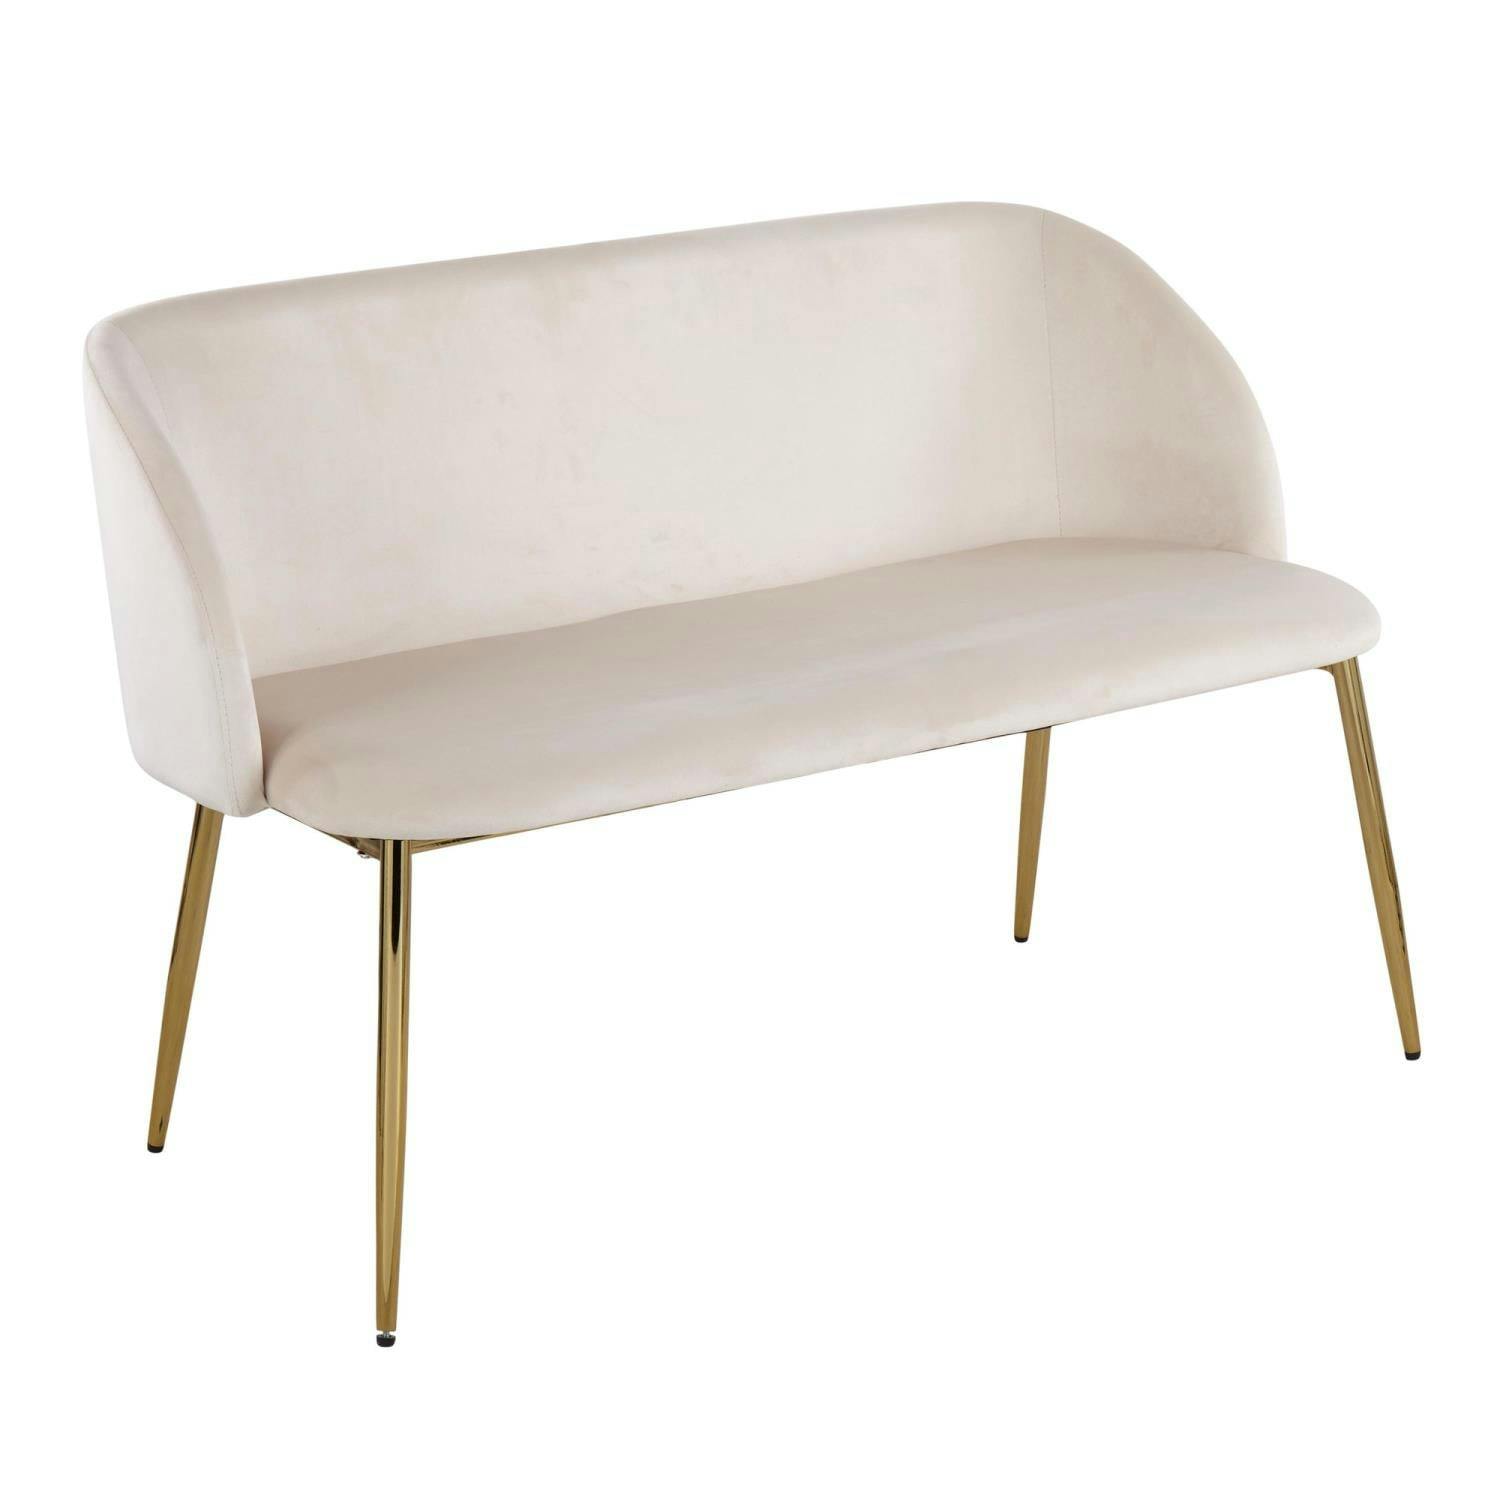 Glamorous White Velvet Curved Bench with Gold-Tone Legs